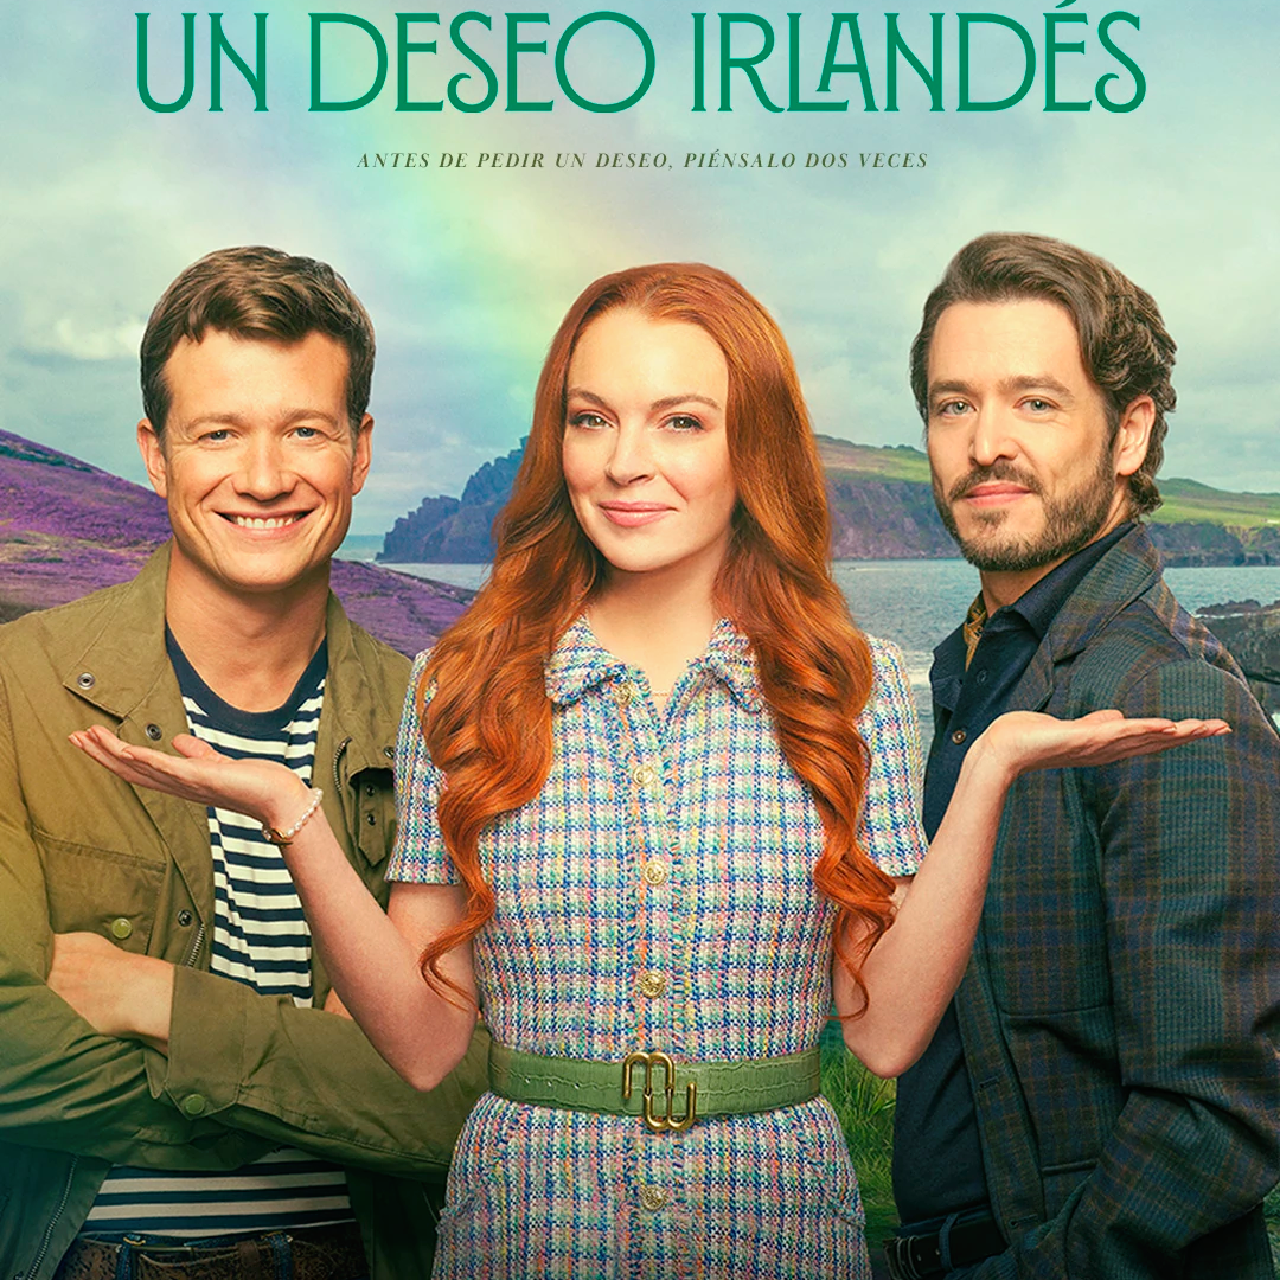 Lindsay Lohan regresa con ‘Un Deseo Irlandés’ en Netflix